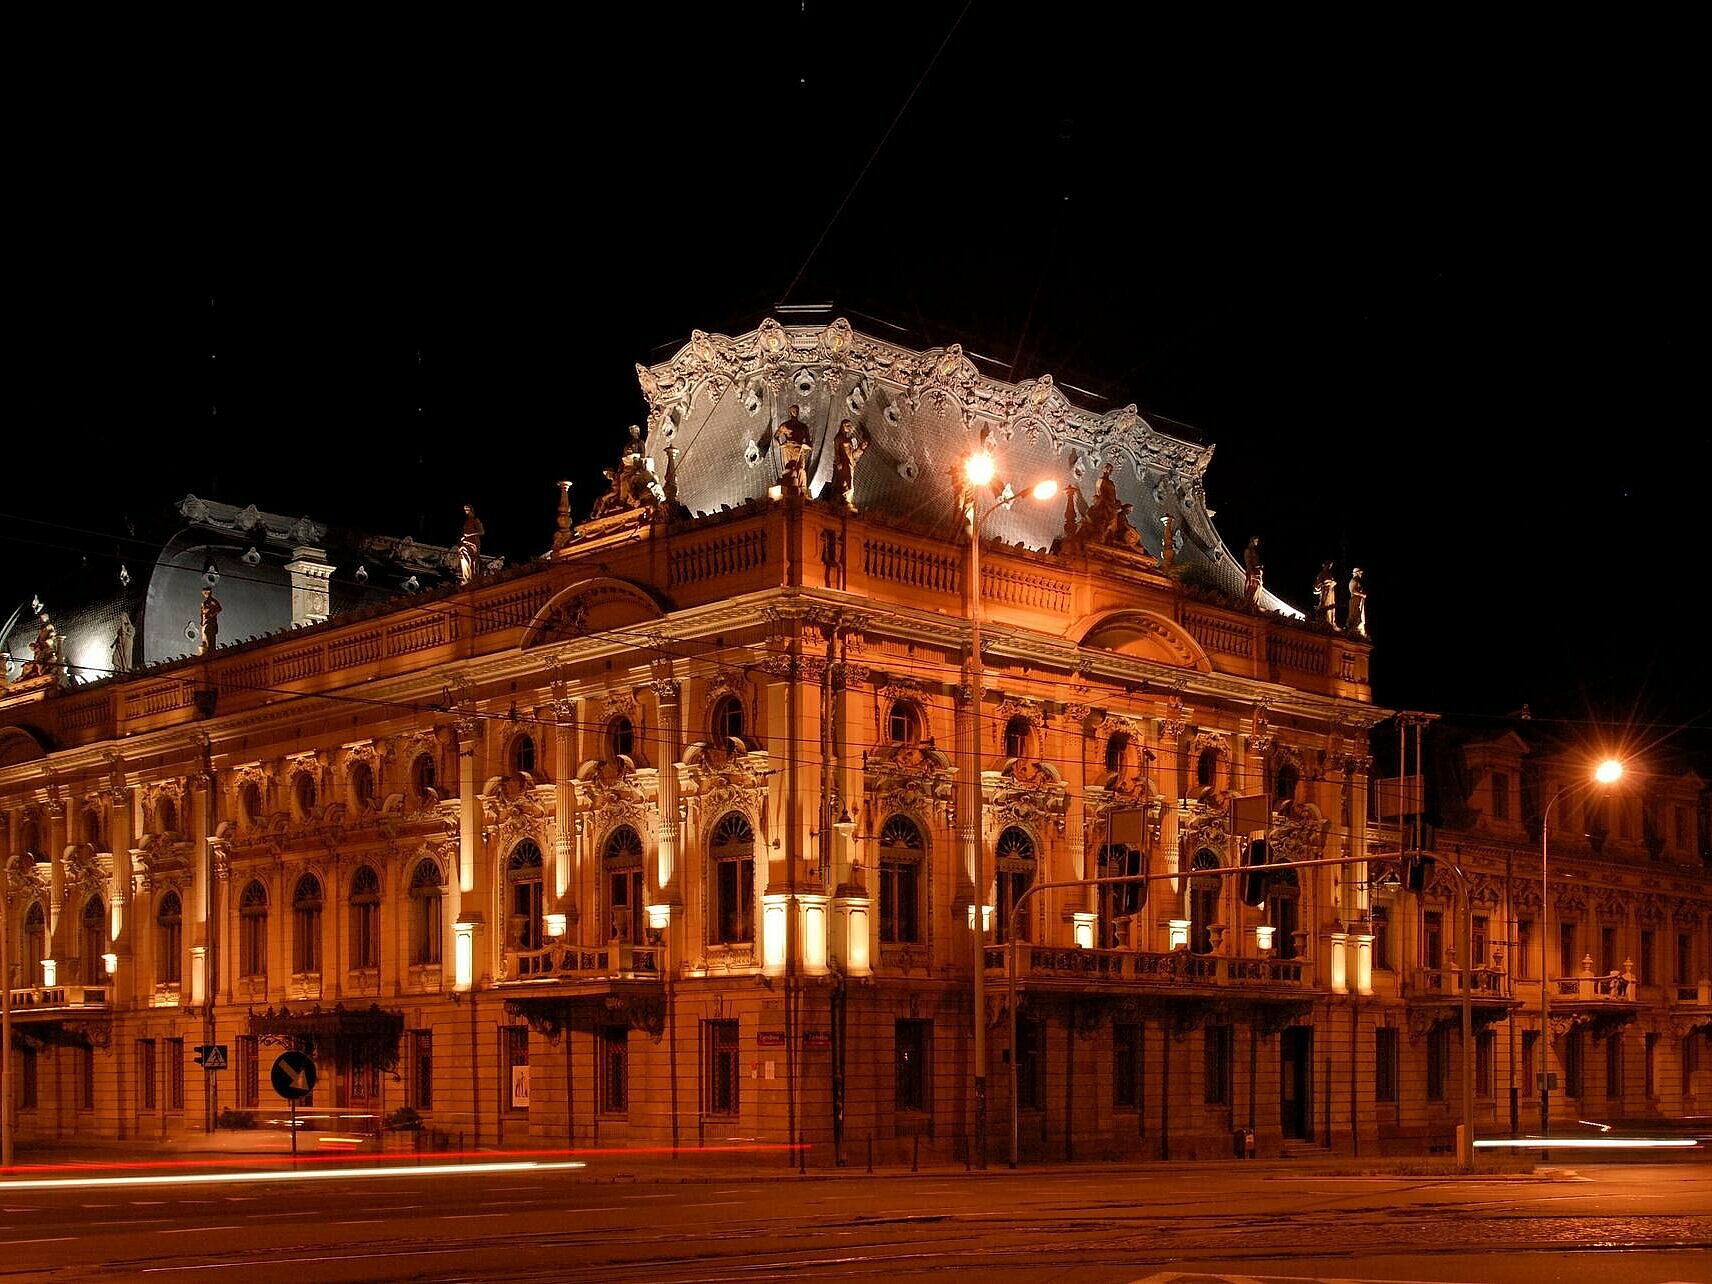 Izrael Poznański Palast , fot. P. Buczek